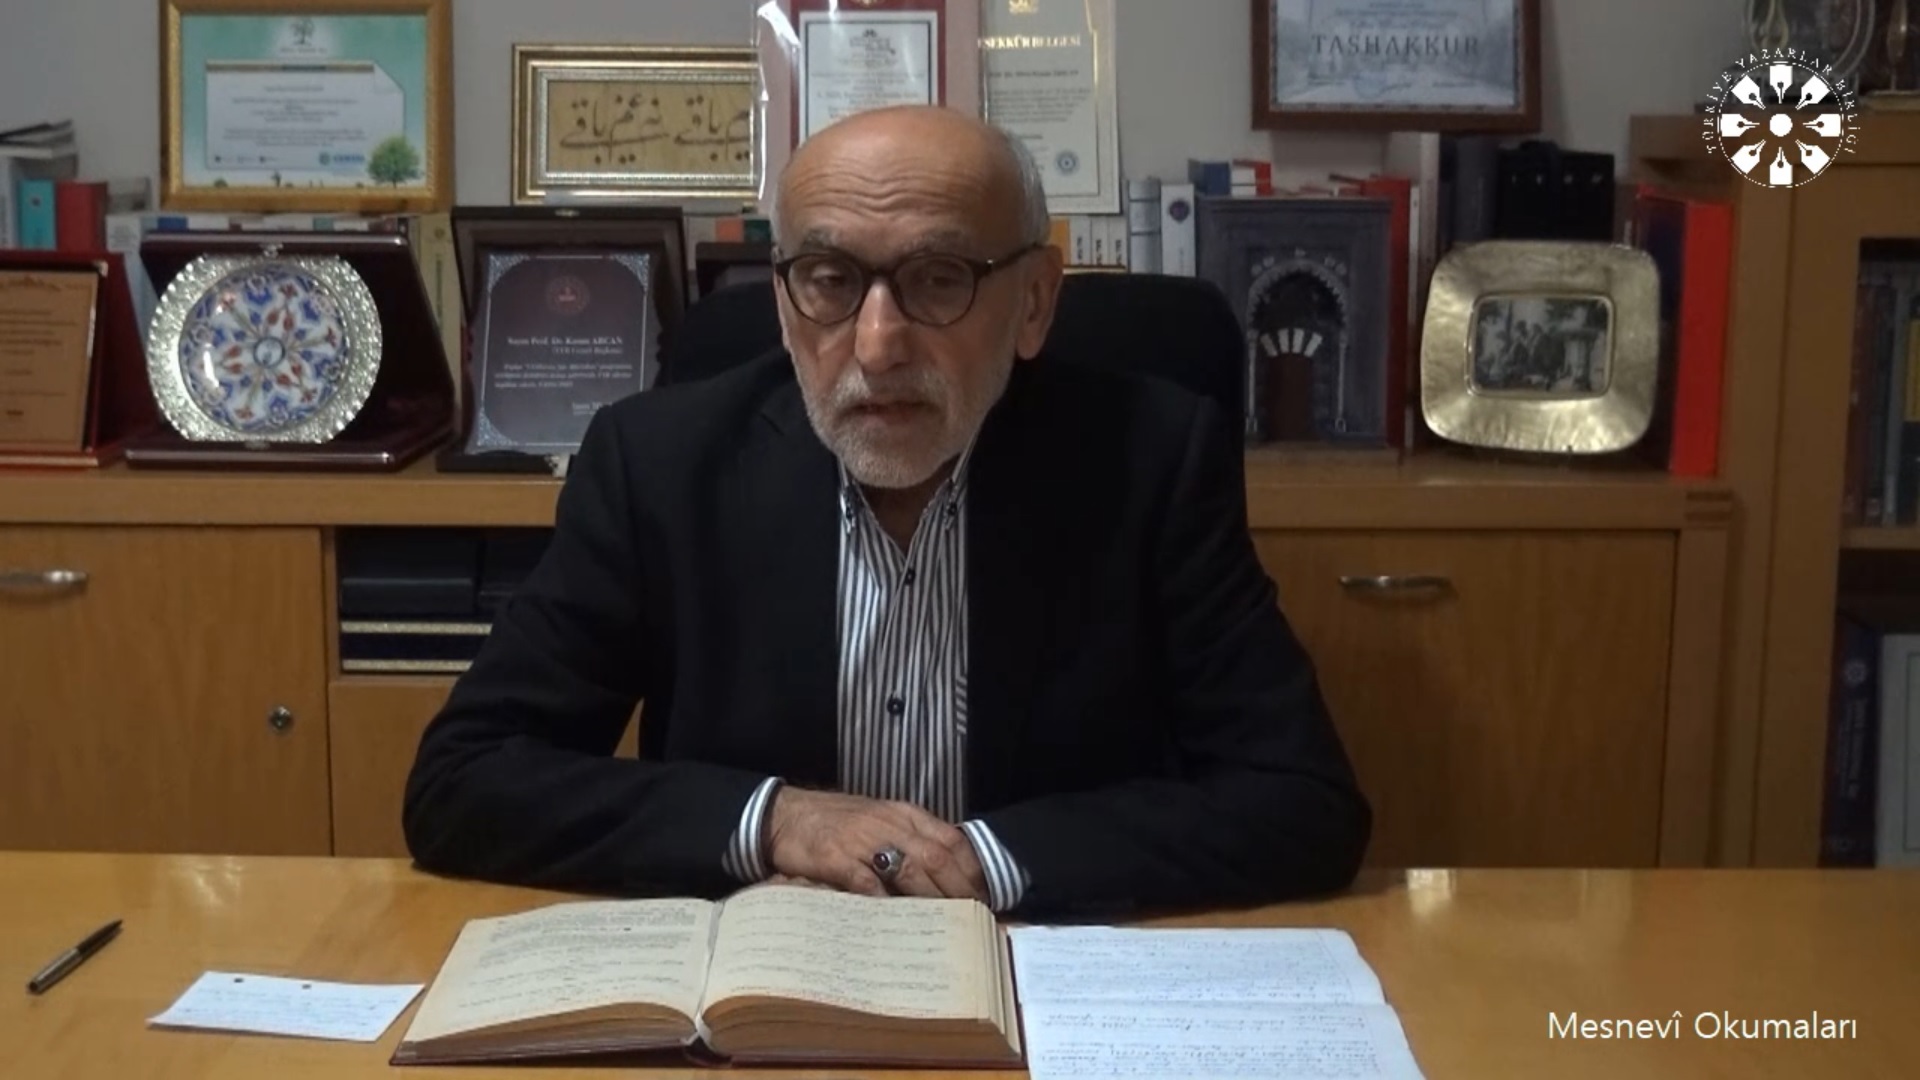 Mesnevî Okumaları -198- Dr. Halil İbrahim Sarıoğlu